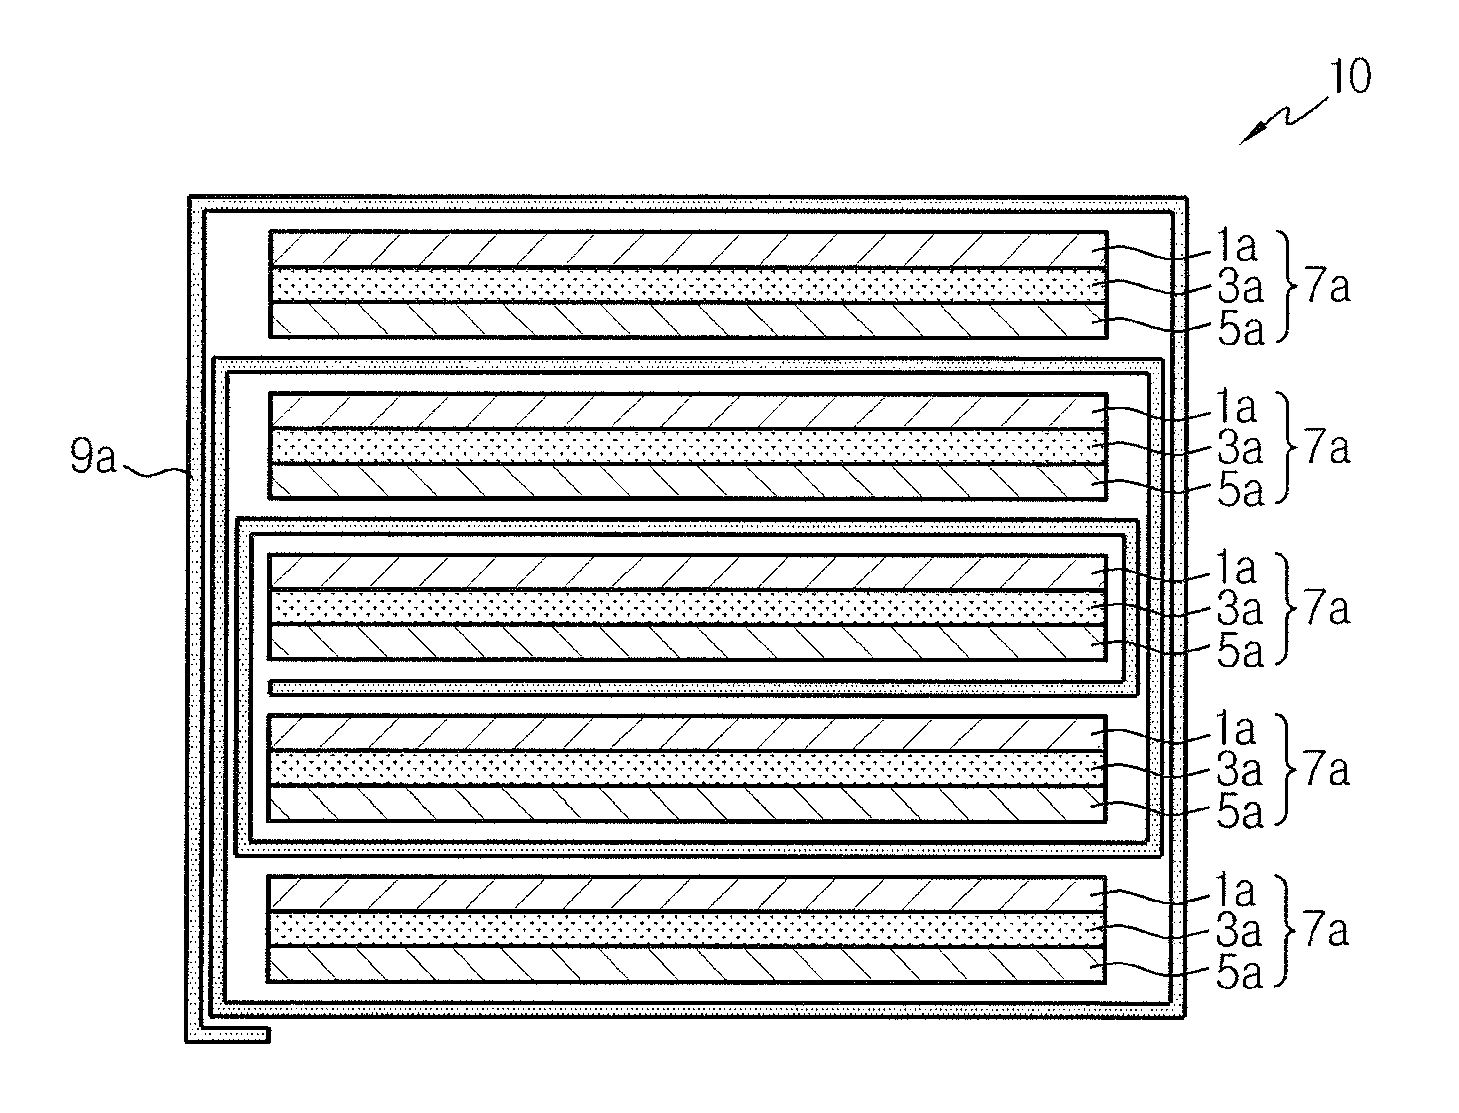 Stack-folding type electrode assembly